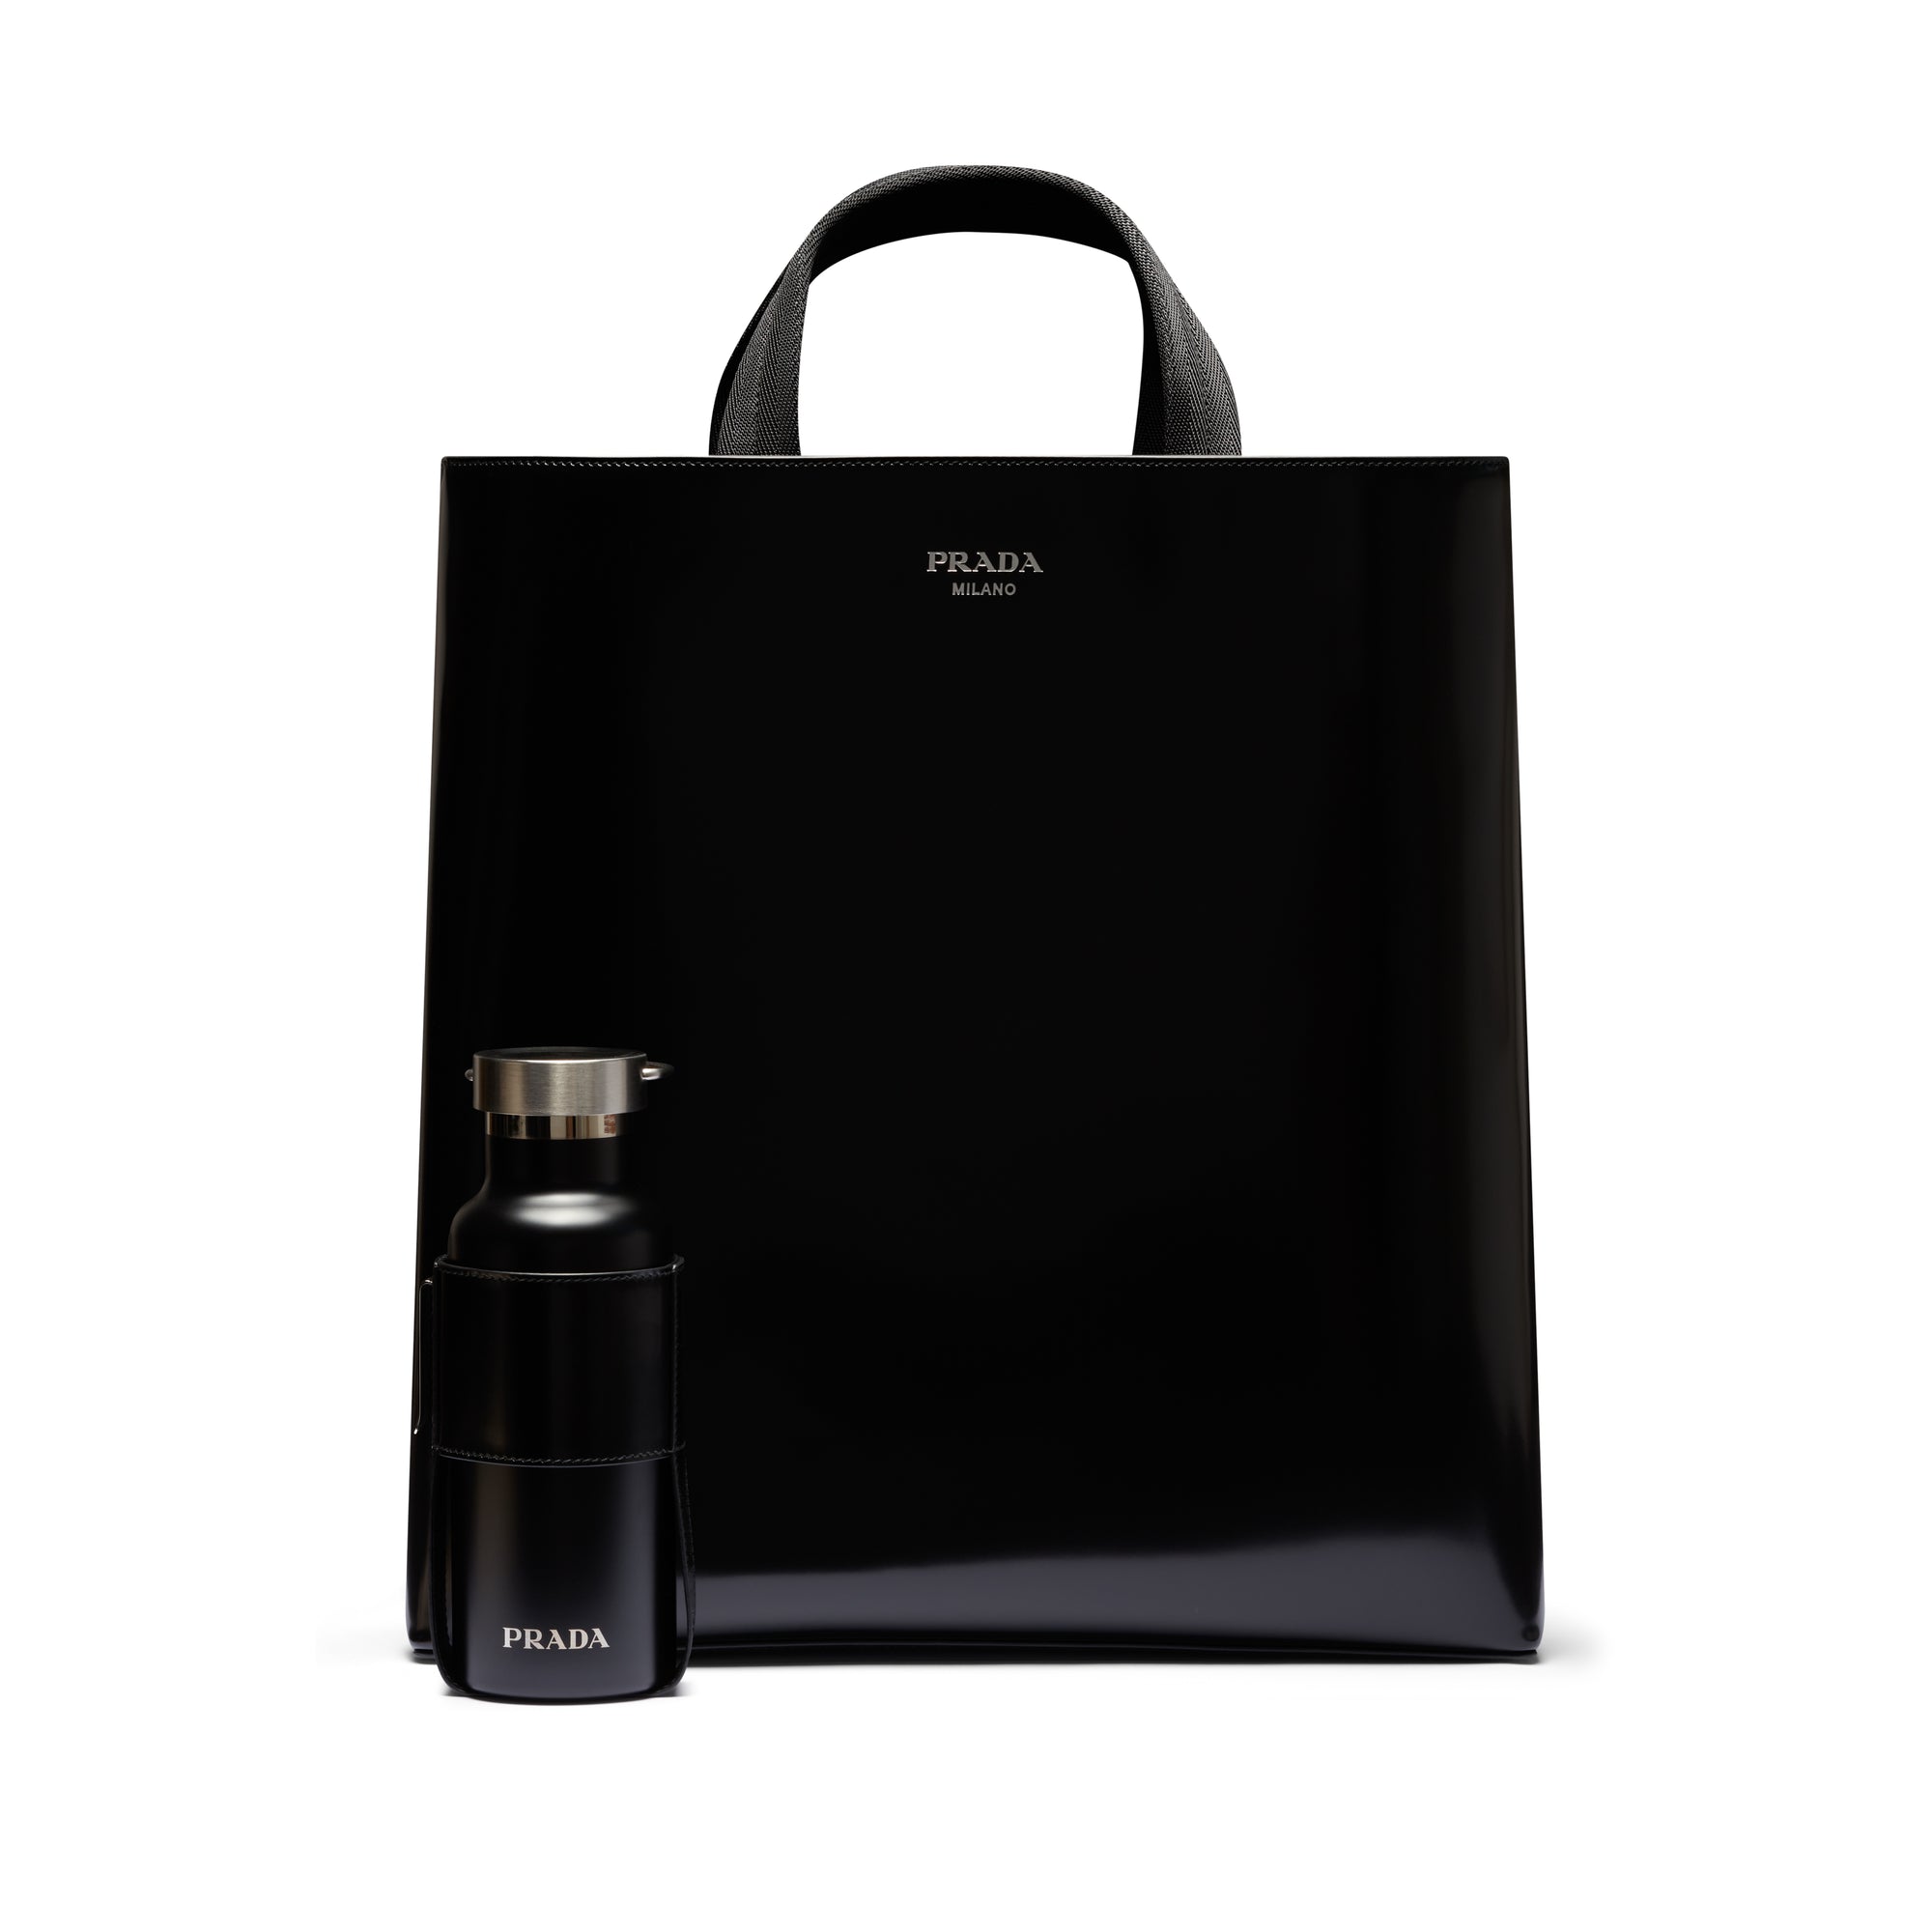 Prada - Men’s Shopping Bag with Bottle - (Black) view 2